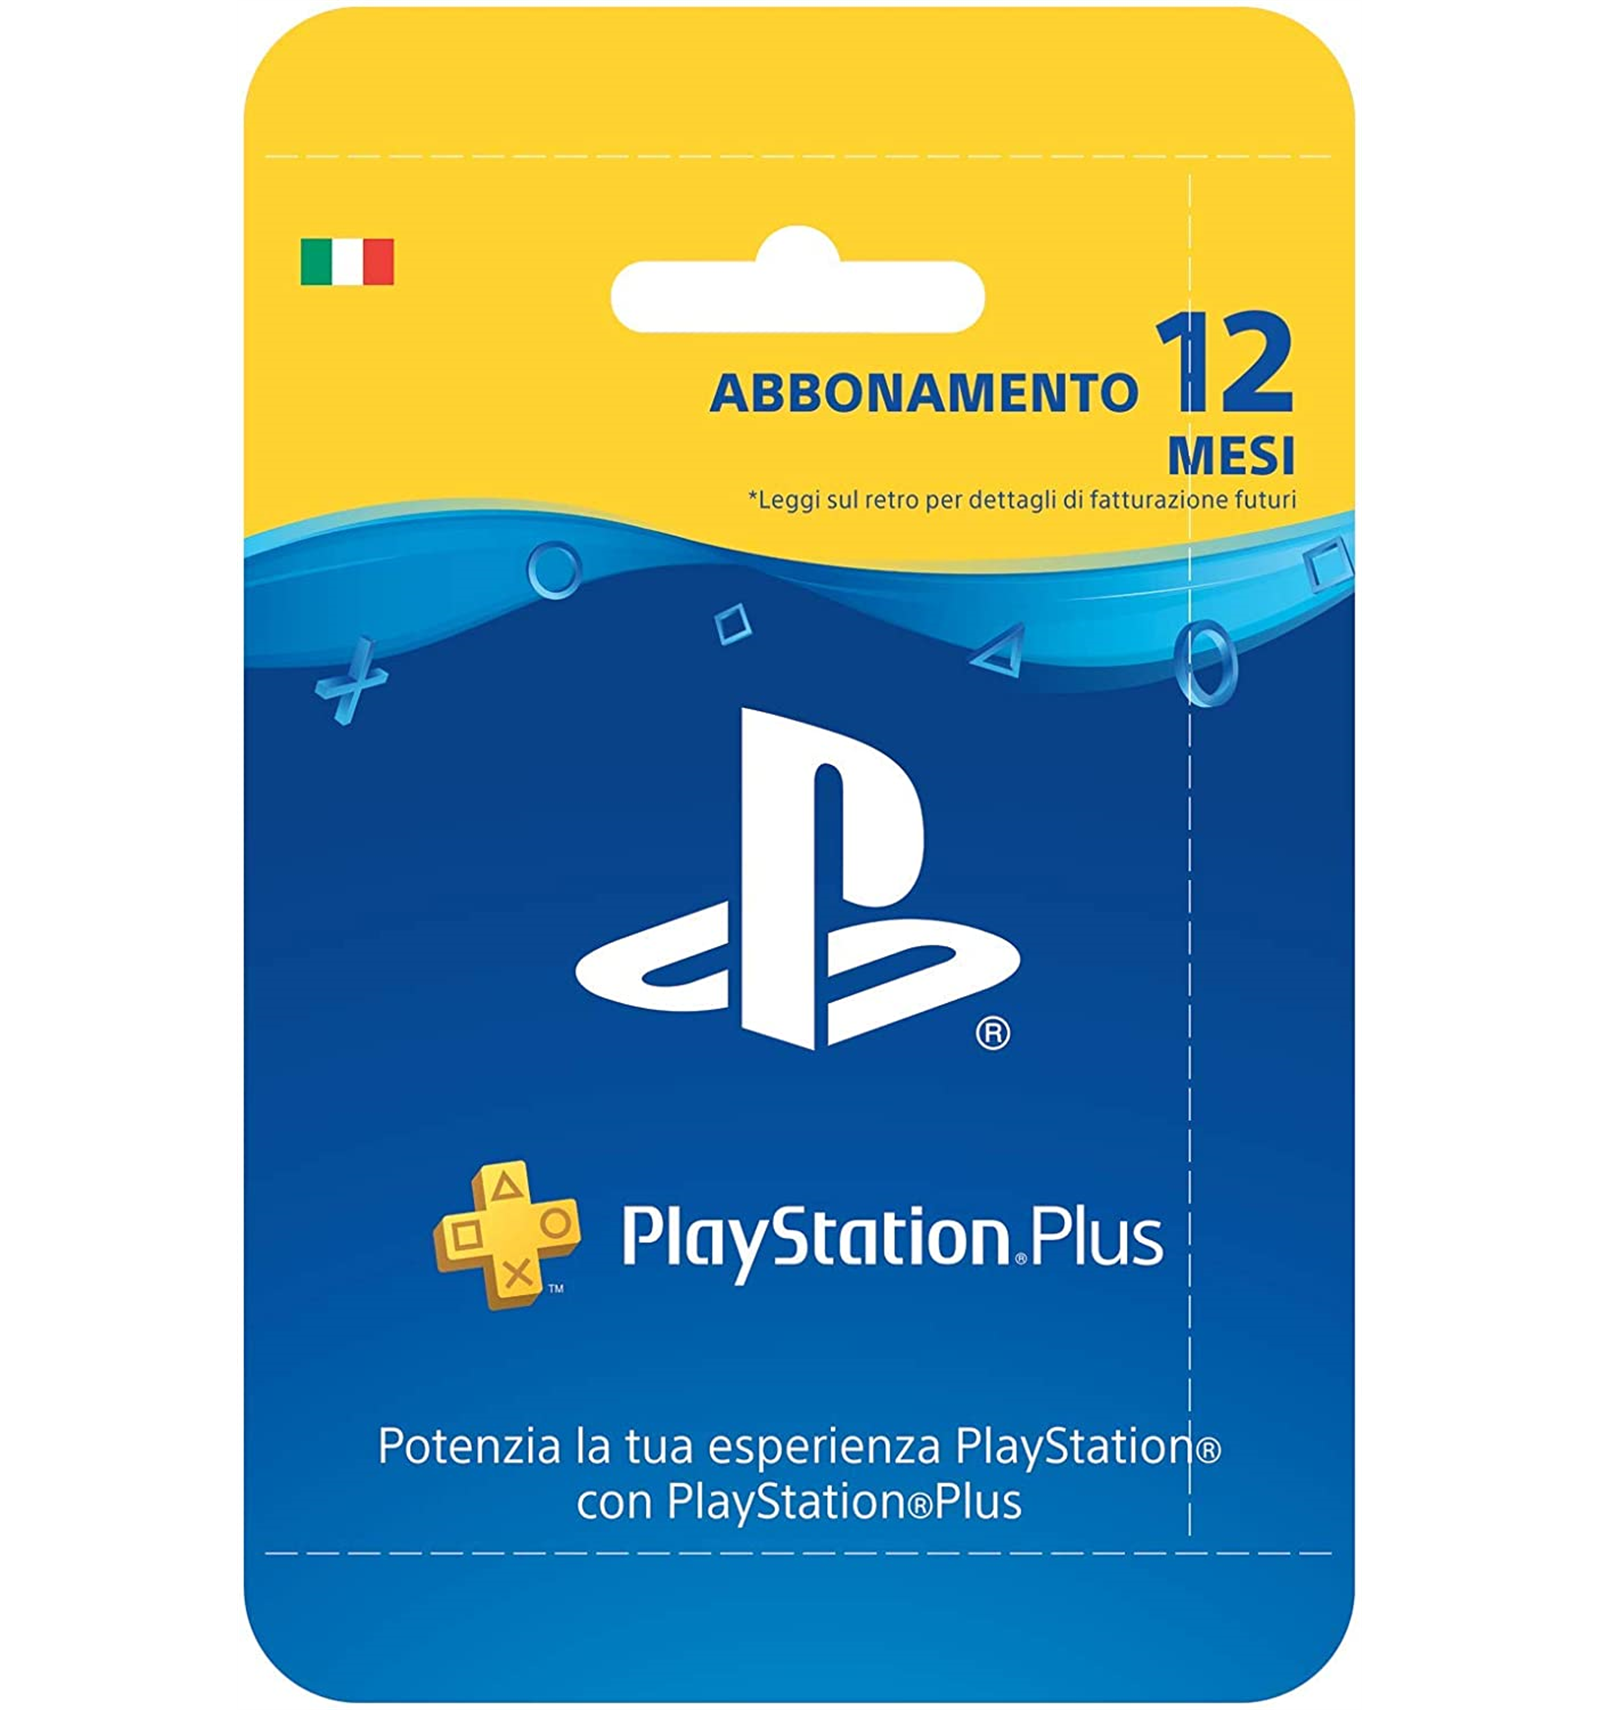 PlayStation PLUS - Abbonamento 12 Mesi - DaxStore S.R.L.S.